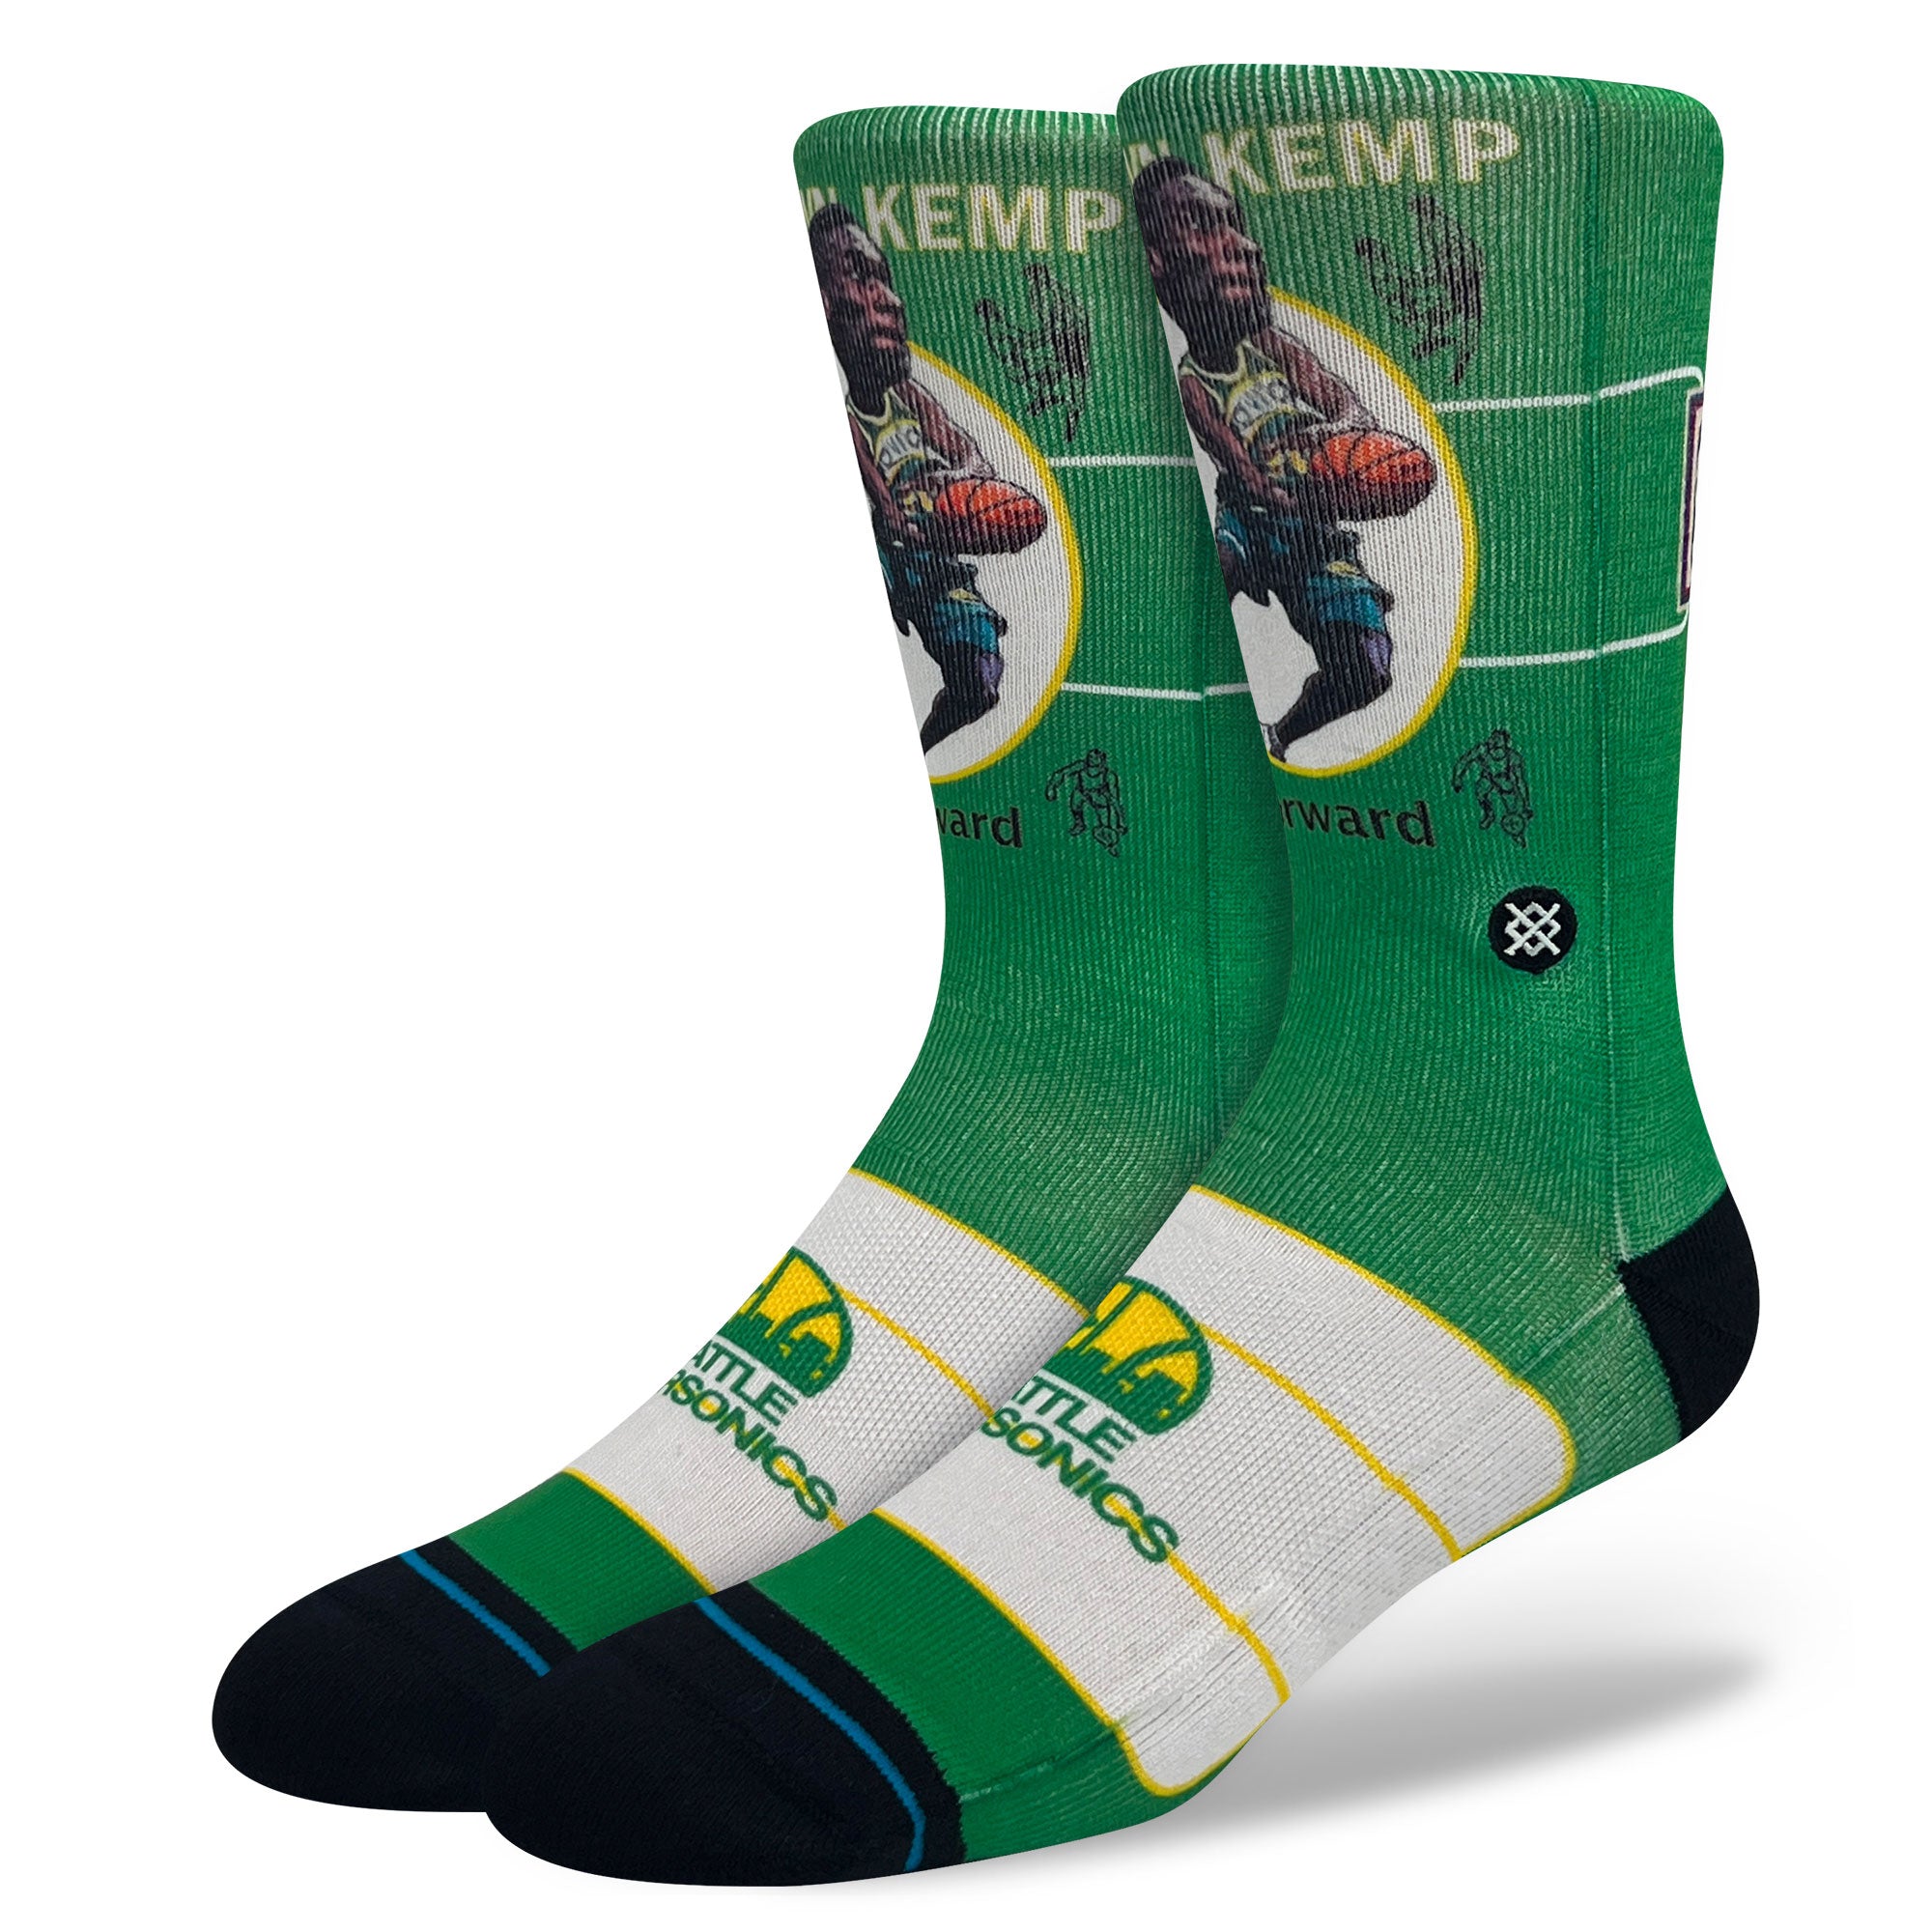 KEMP RETRO BIGHEAD - Multi Colour – Stance Socks AU